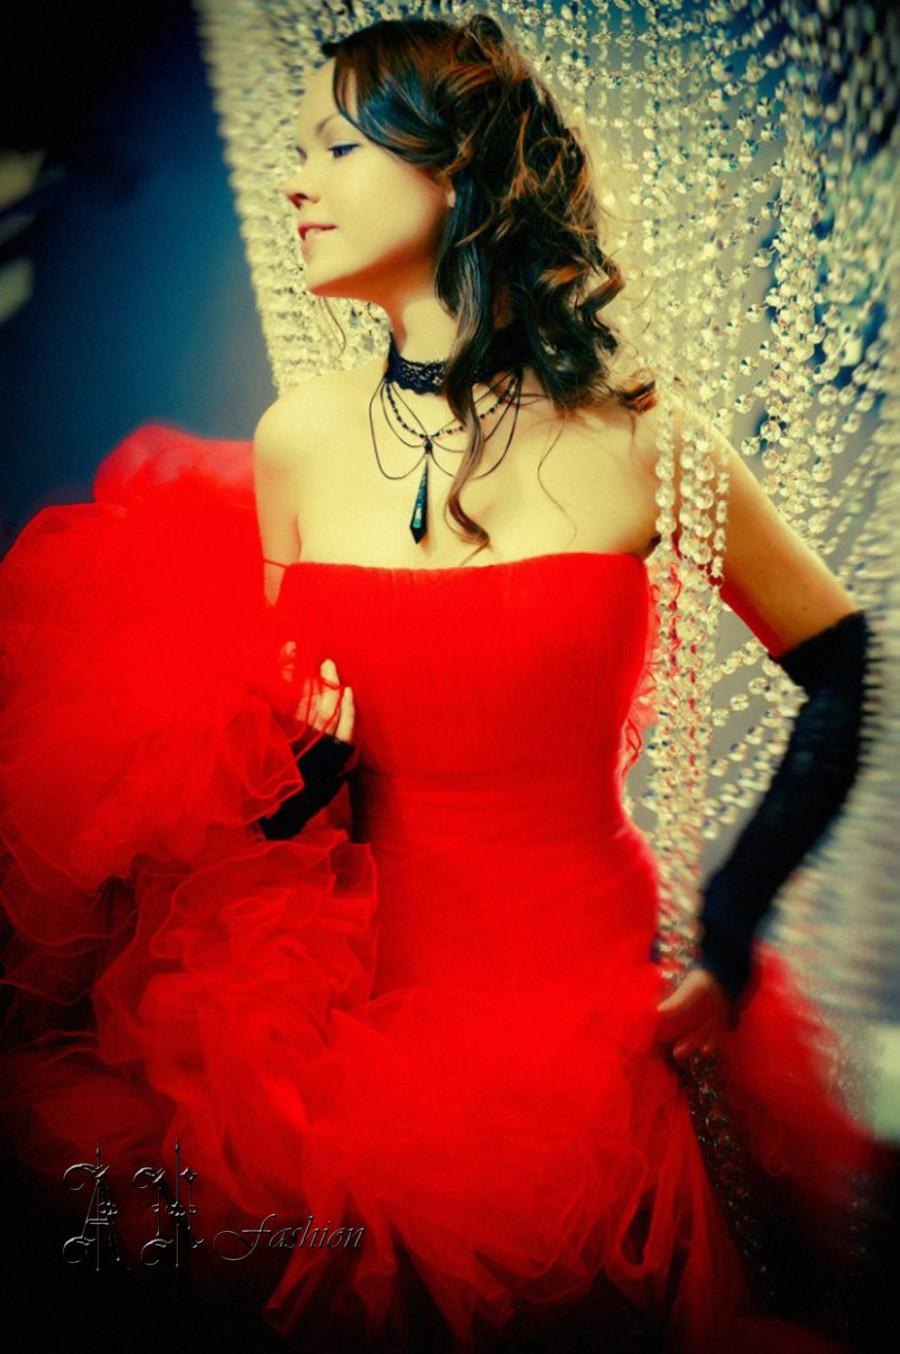 Hochzeit - Ball Gown Red Wedding Dress. Fluffy Wedding Dress. Red Wedding Dress.Princess Wedding Dress. Prom Dress. Formal Dress. Tightening corset.